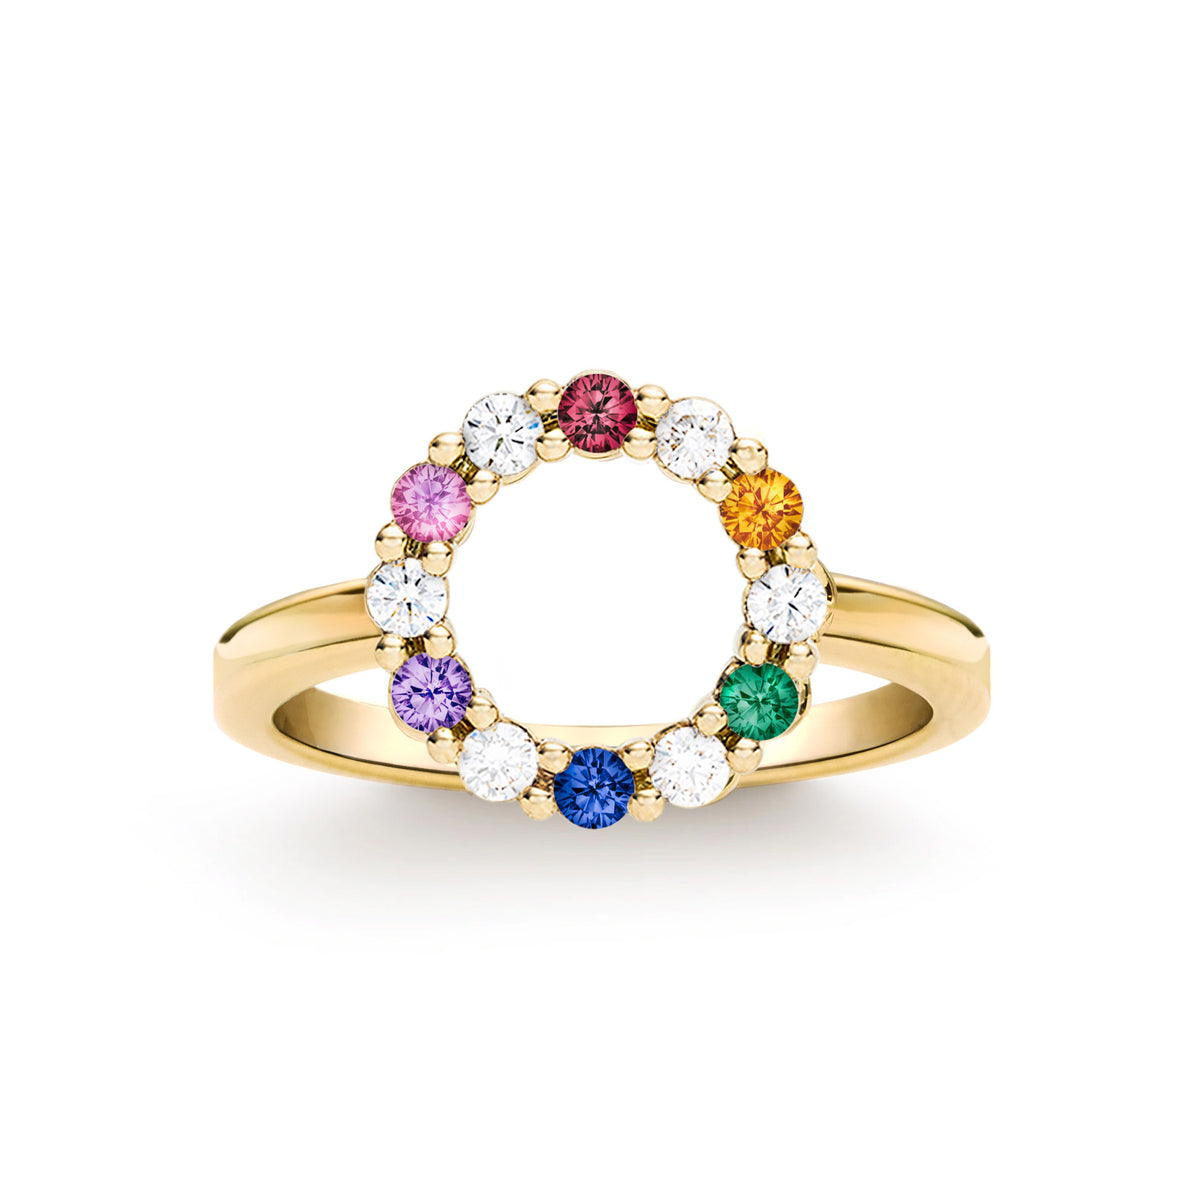 Tiny Engagement Ring | Engagement Rings | Nir Oliva Jewelry